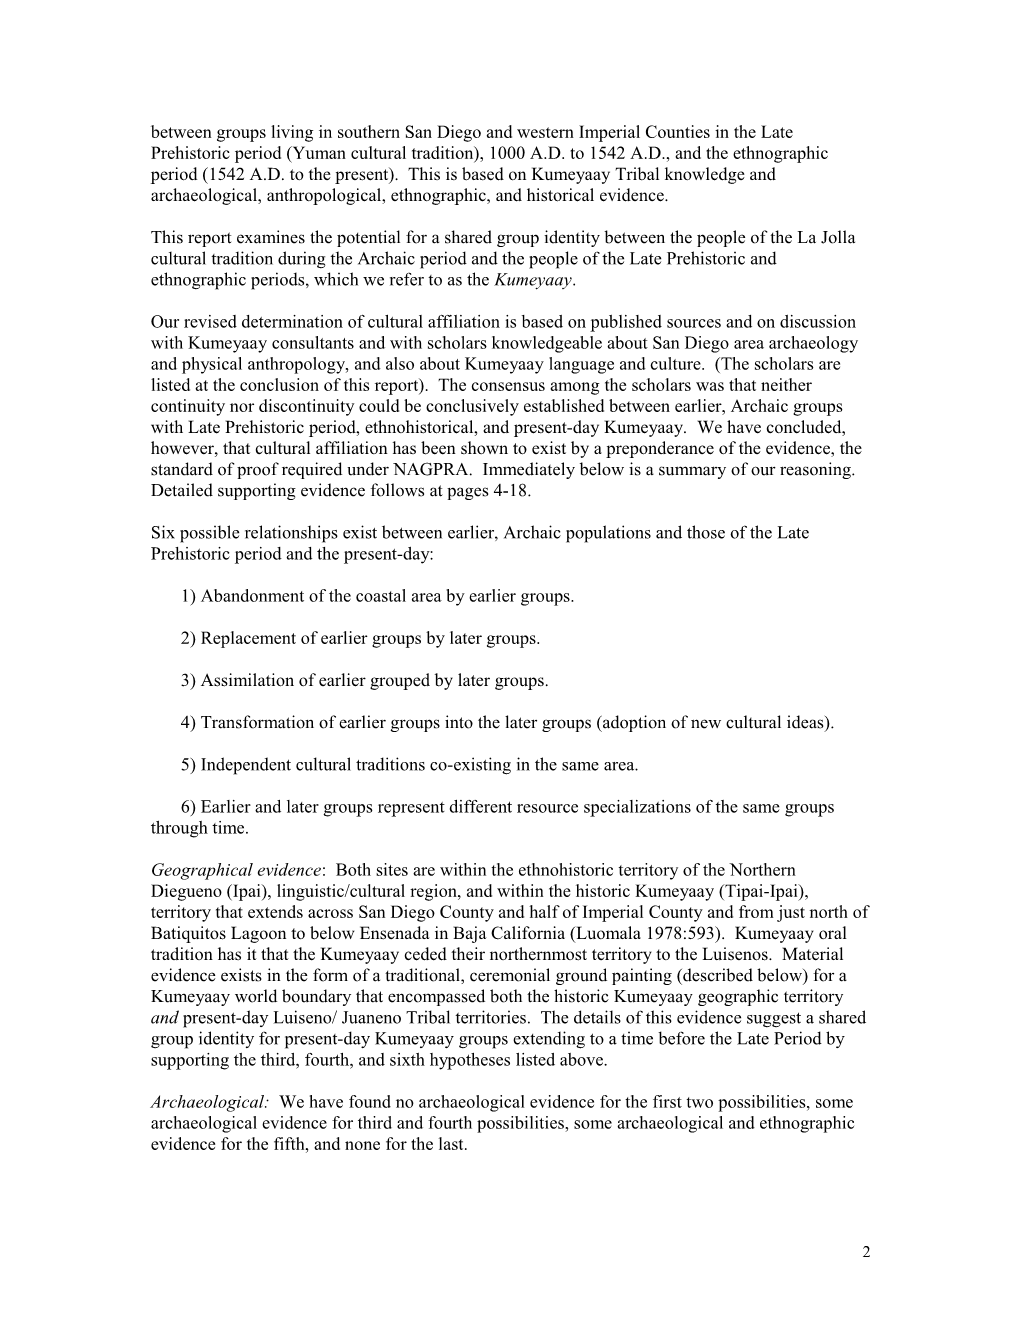 UCLA Draft Report on Kumeyaay Cultural Affiliation